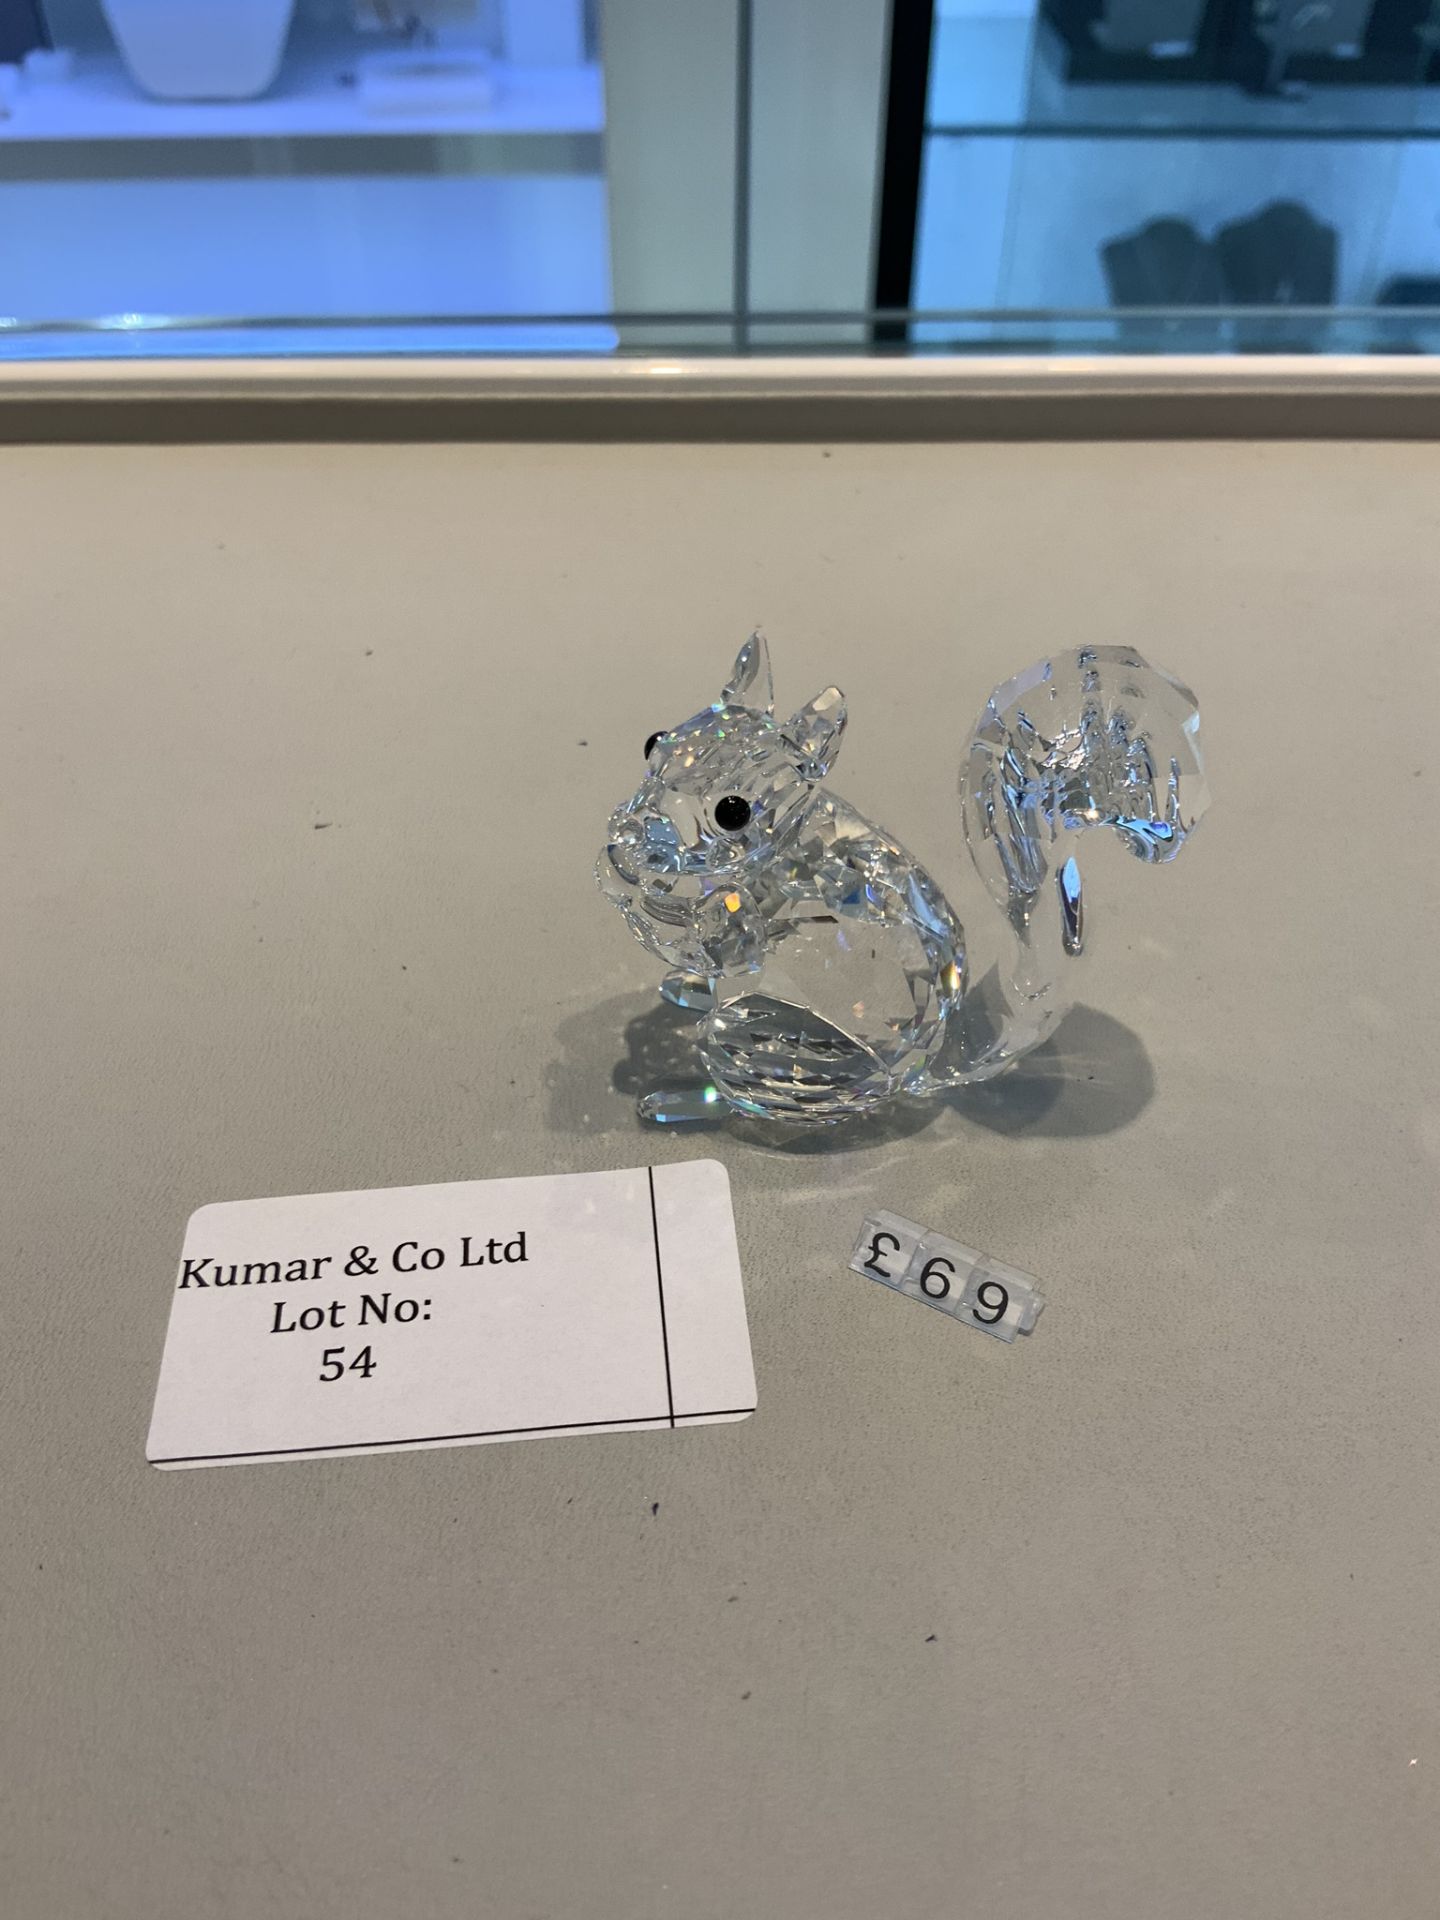 Swarovski Crystal Squirrel Figurine RRP £69 - Image 2 of 3